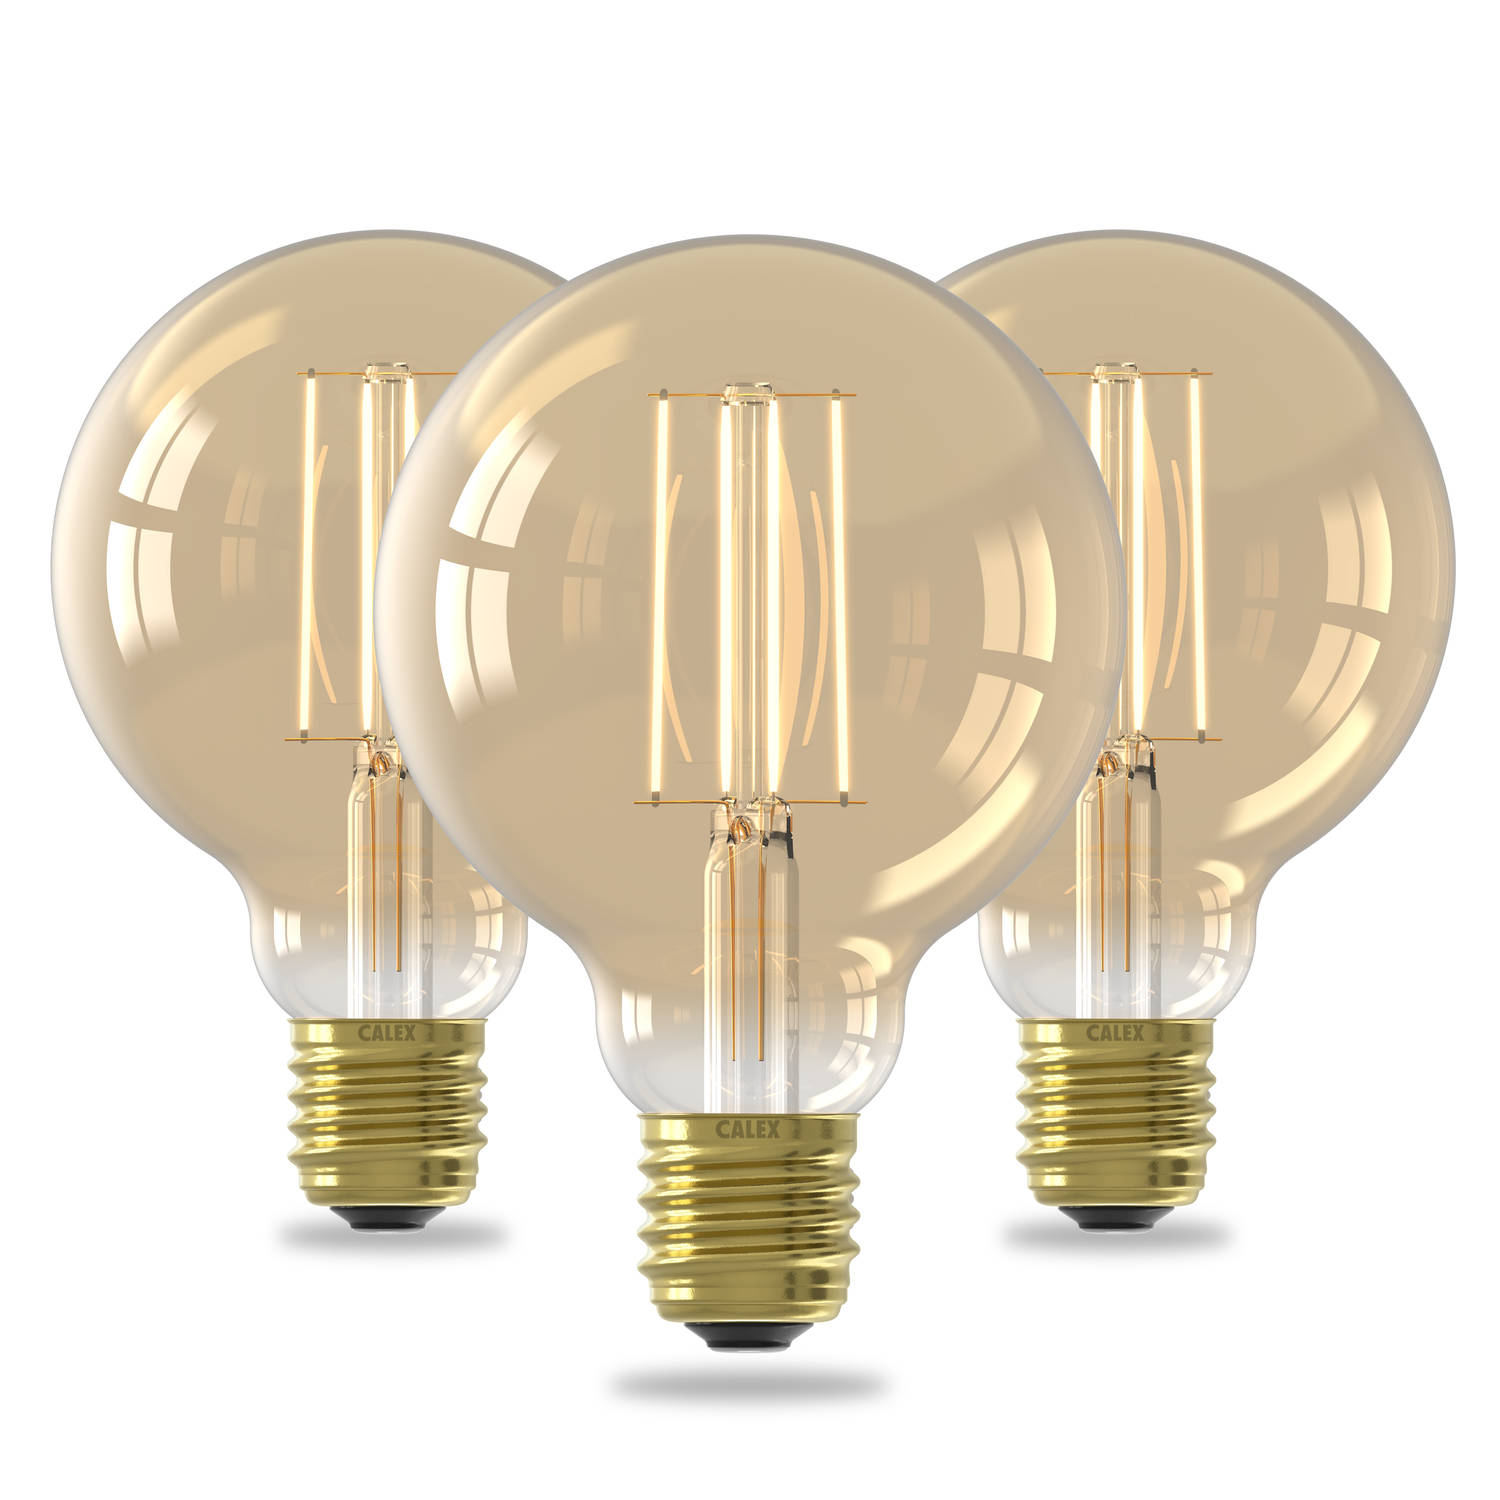 Calex Filament LED Lamp - Set van 3 stuks - G95 Vintage Lichtbron - E27 - Goud - Warm Wit Licht - Dimbaar